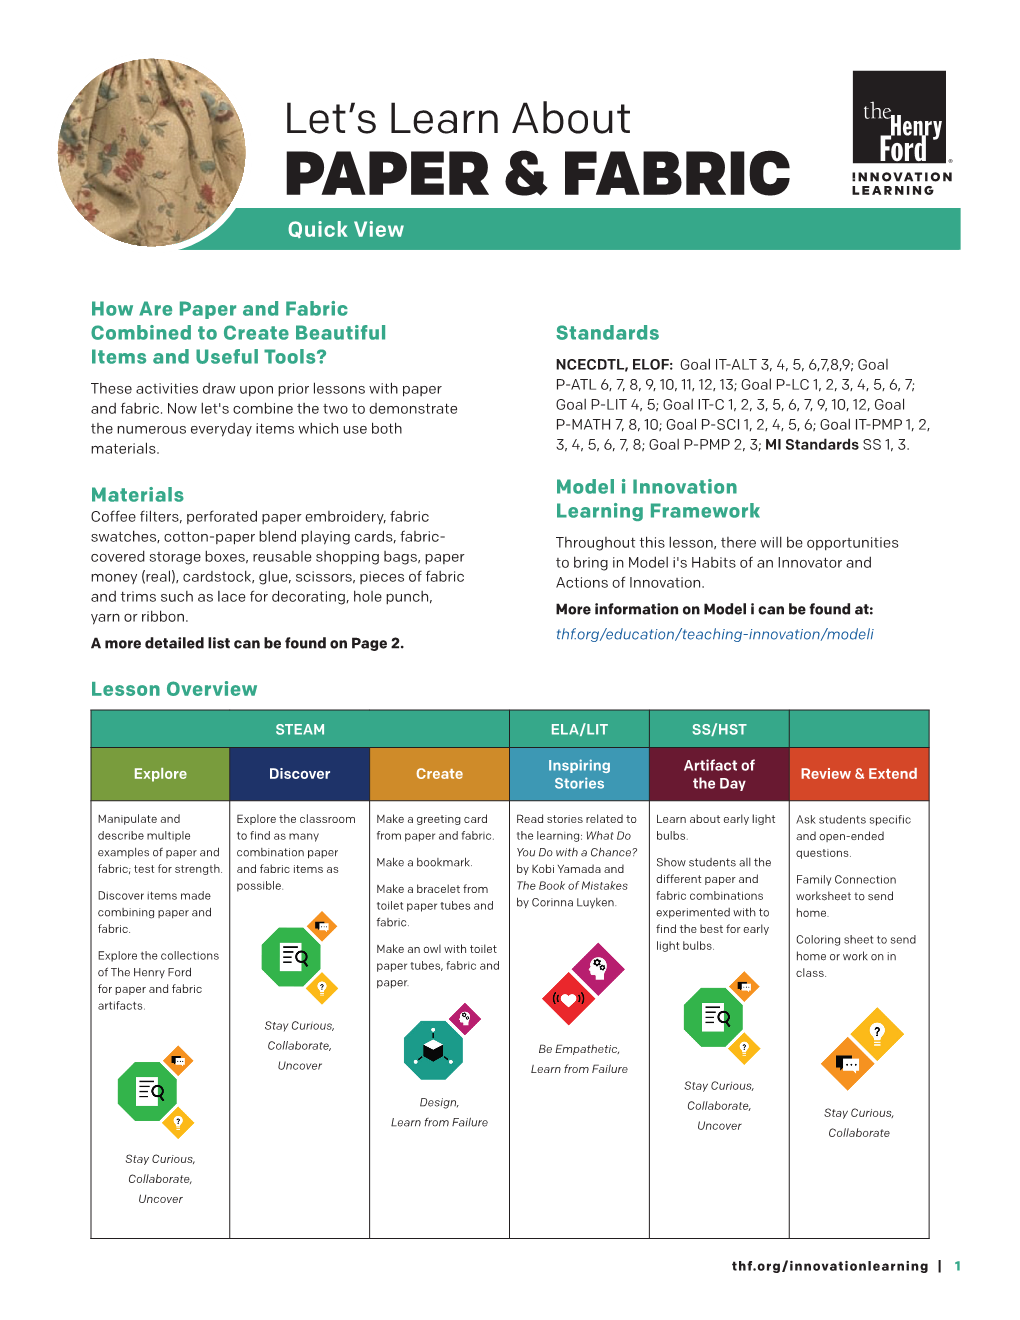 Paper & Fabric Innovation